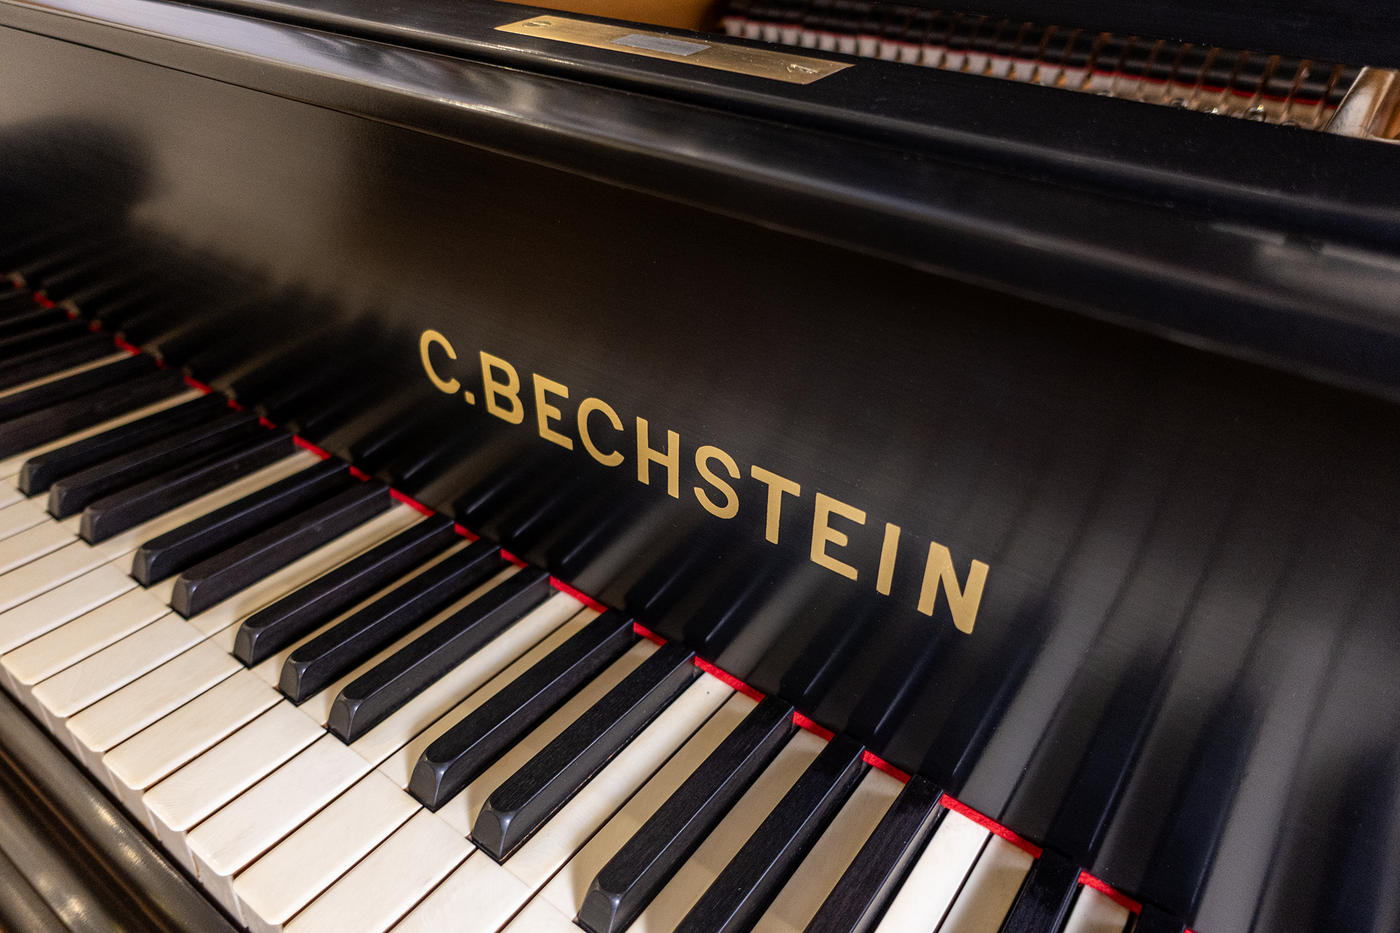 Bechstein A Grand Piano